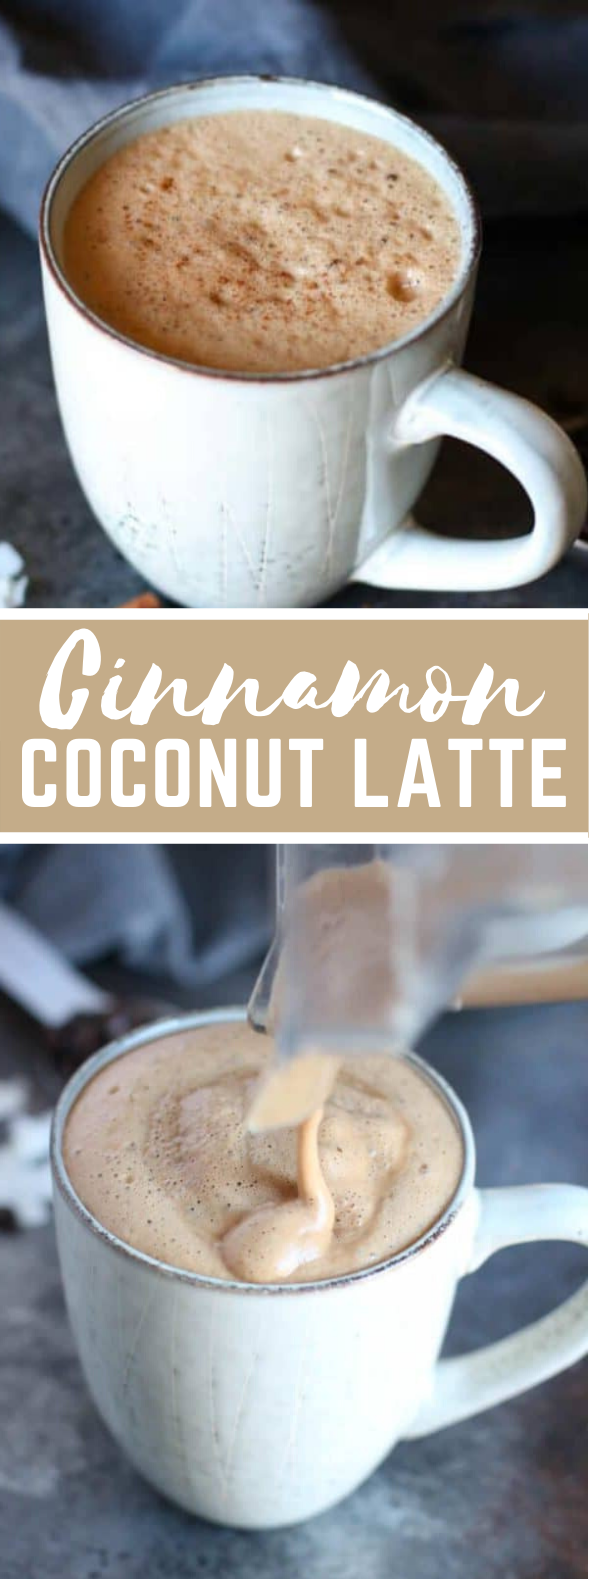 Cinnamon Coconut Latte #drinks #dairyfree